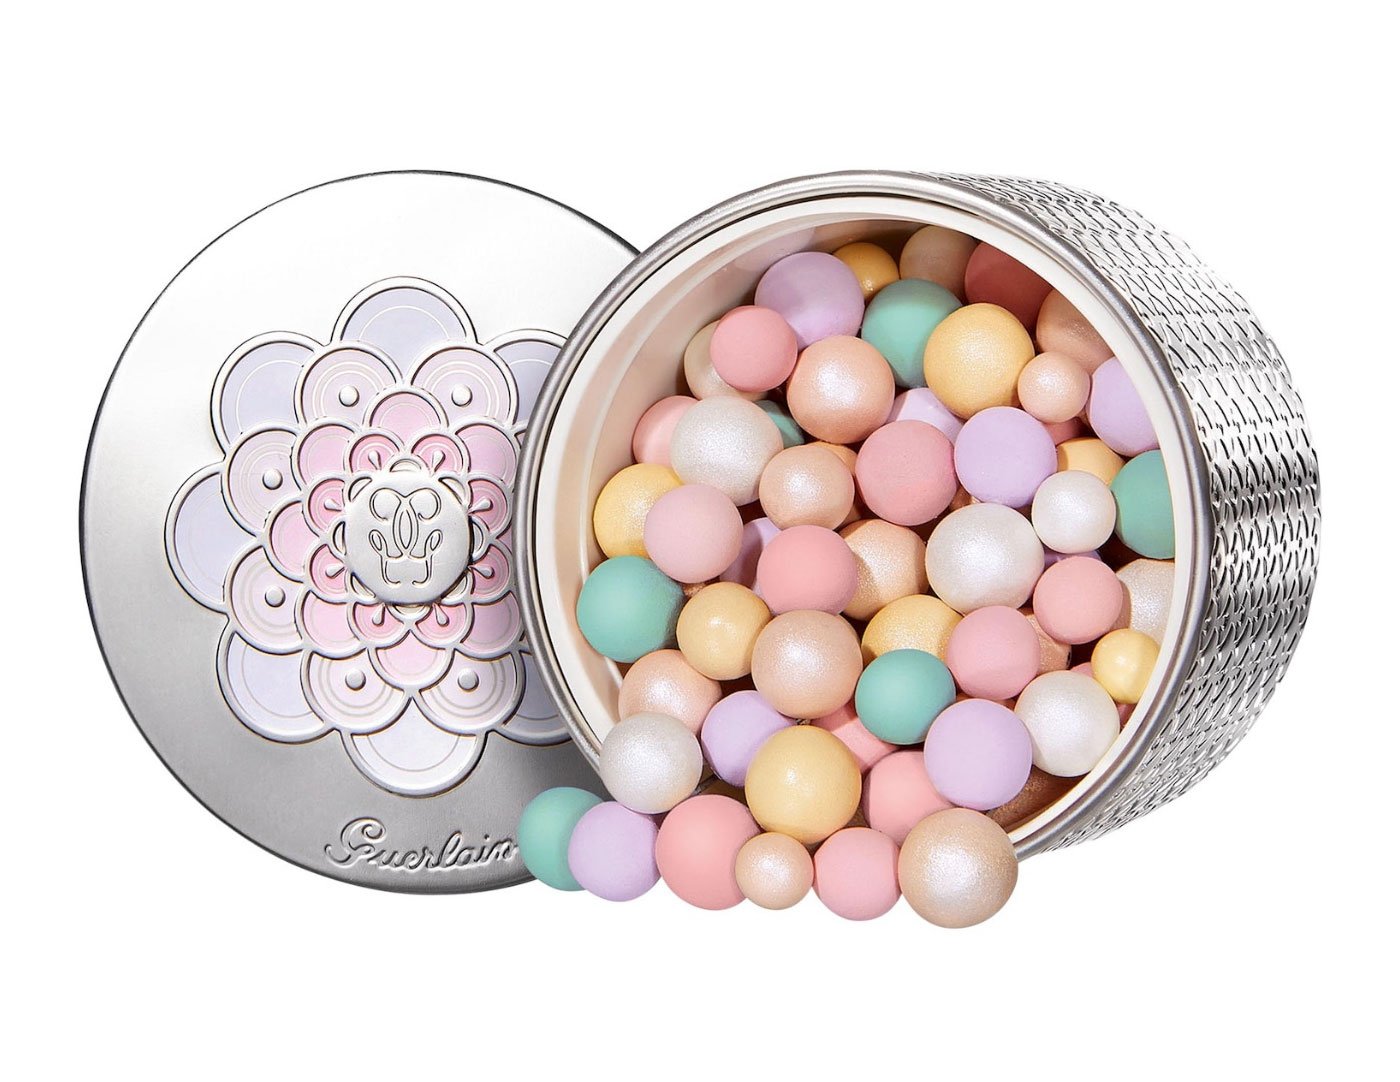 Guerlain - Météorites Illuminating Highlighter Powder Pearls